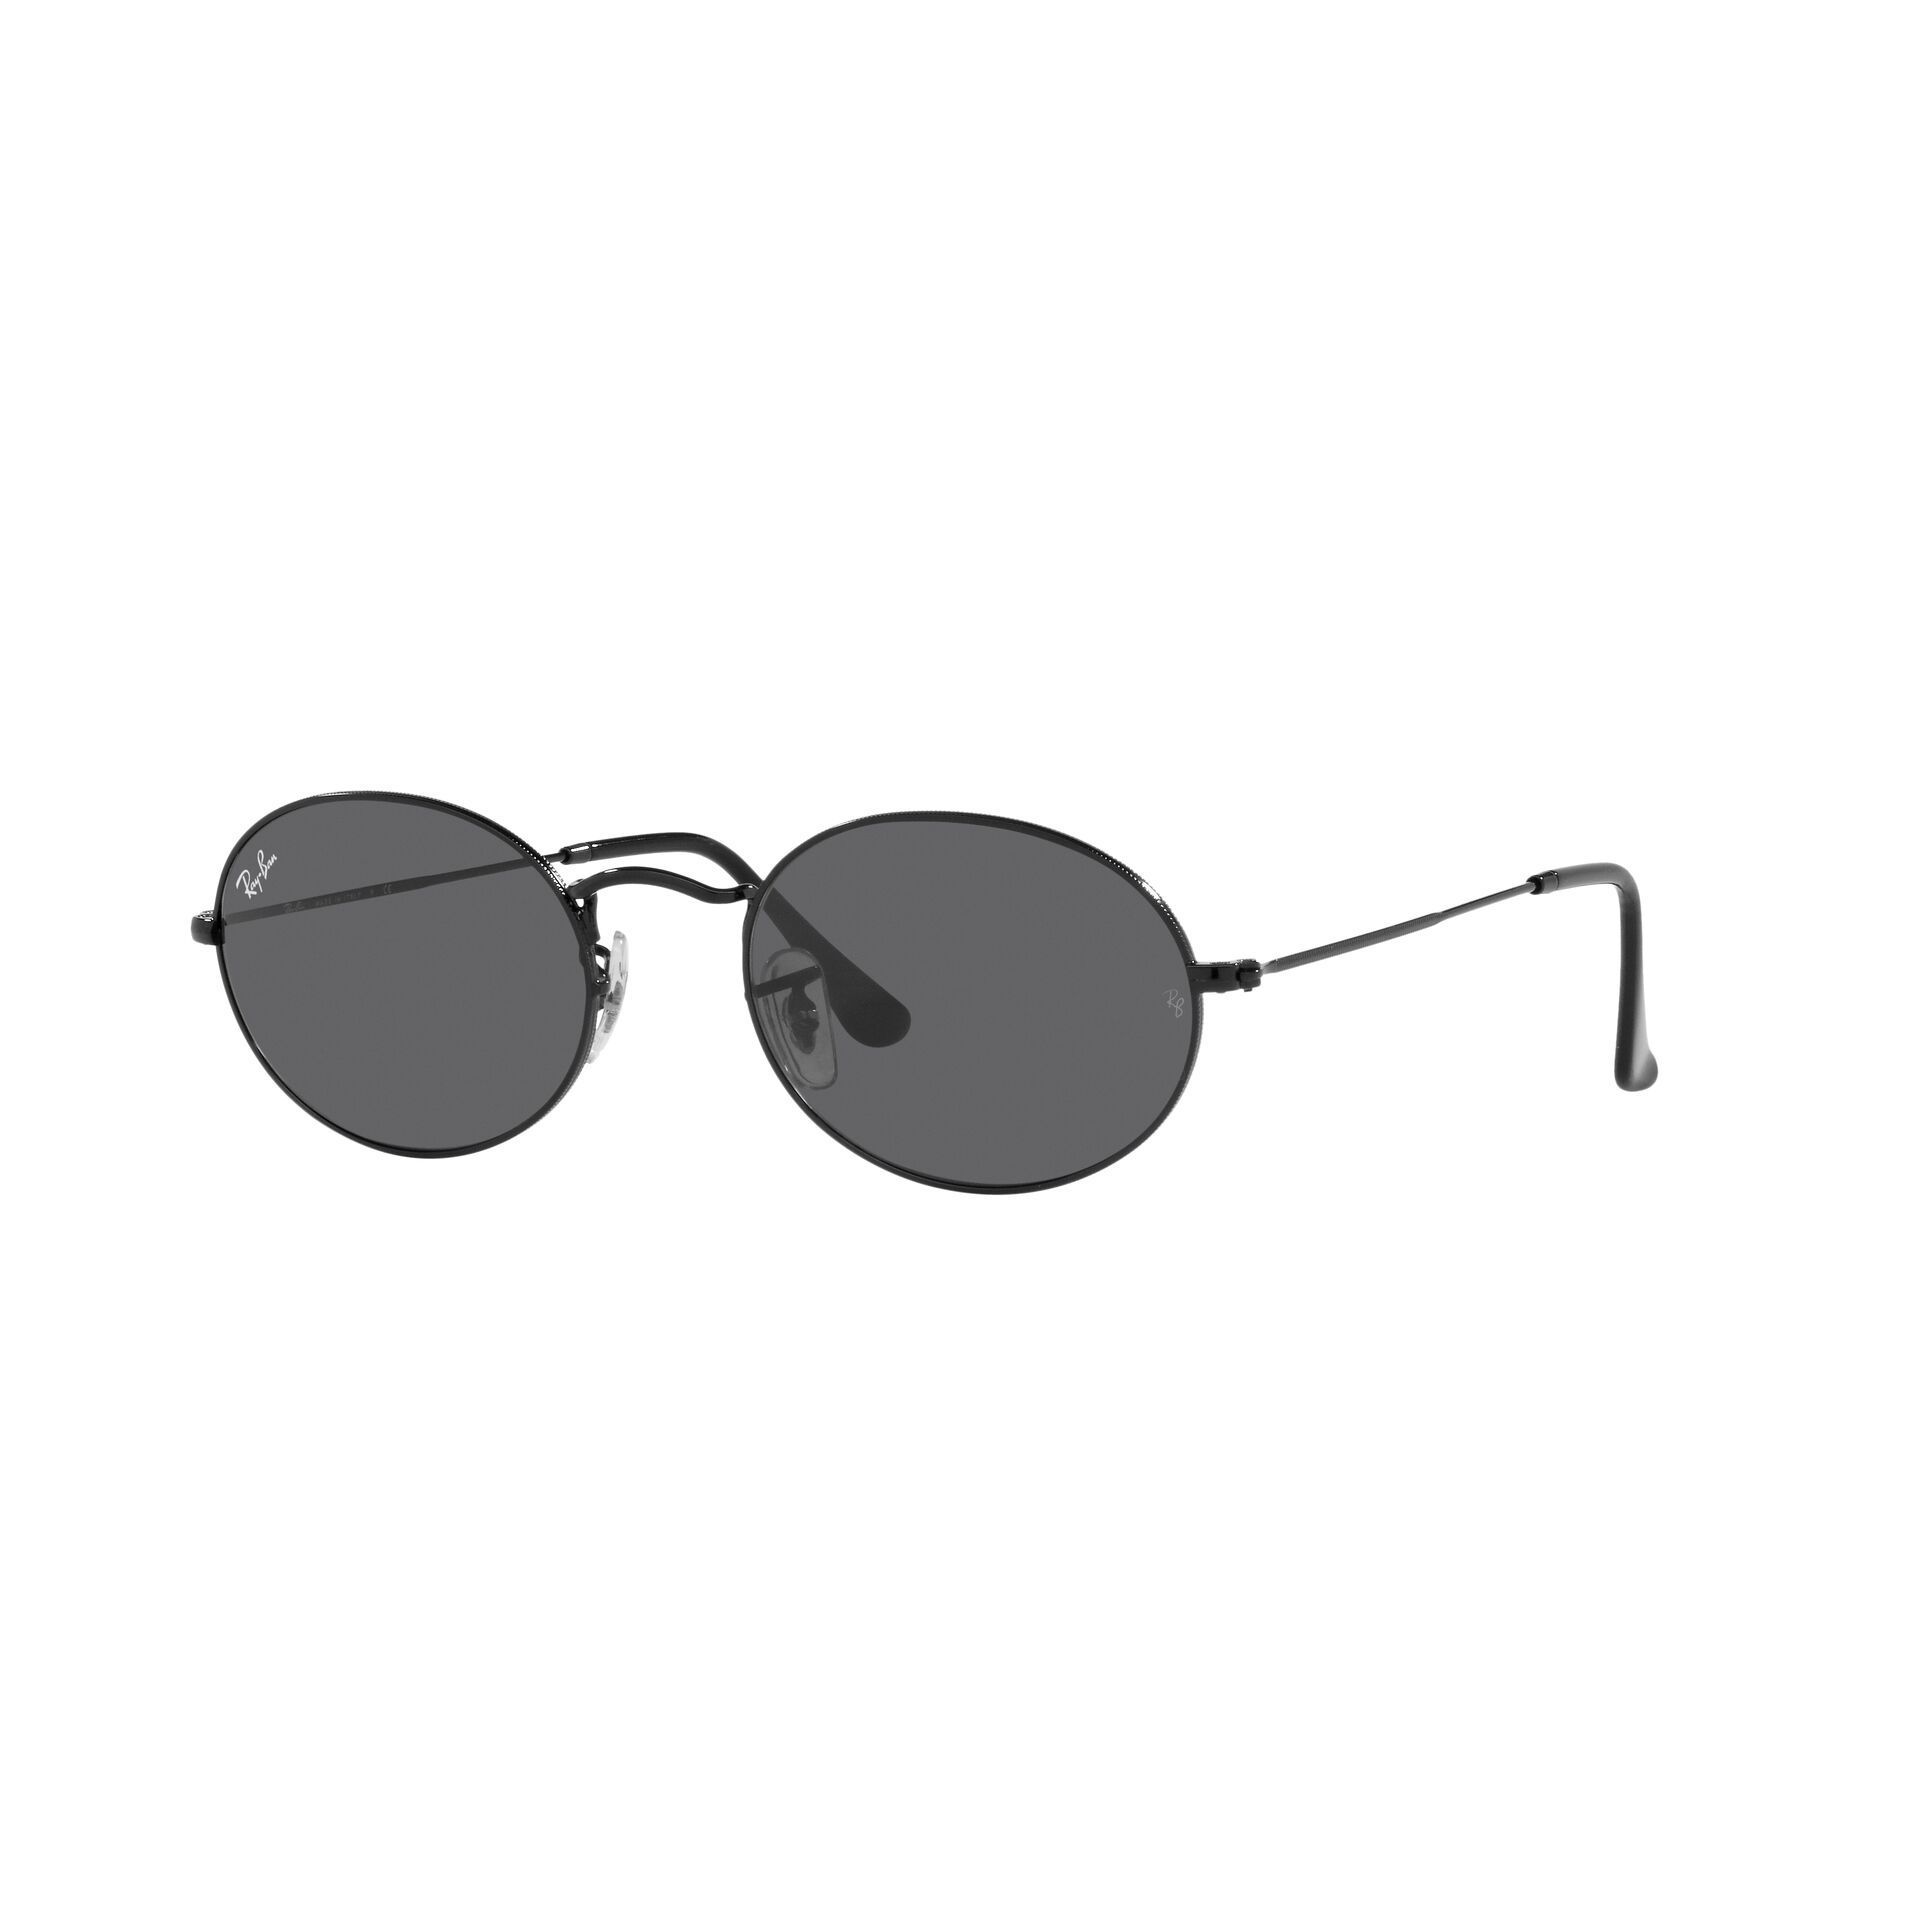 RB3547 Oval Sunglasses 002 B1 - size 54